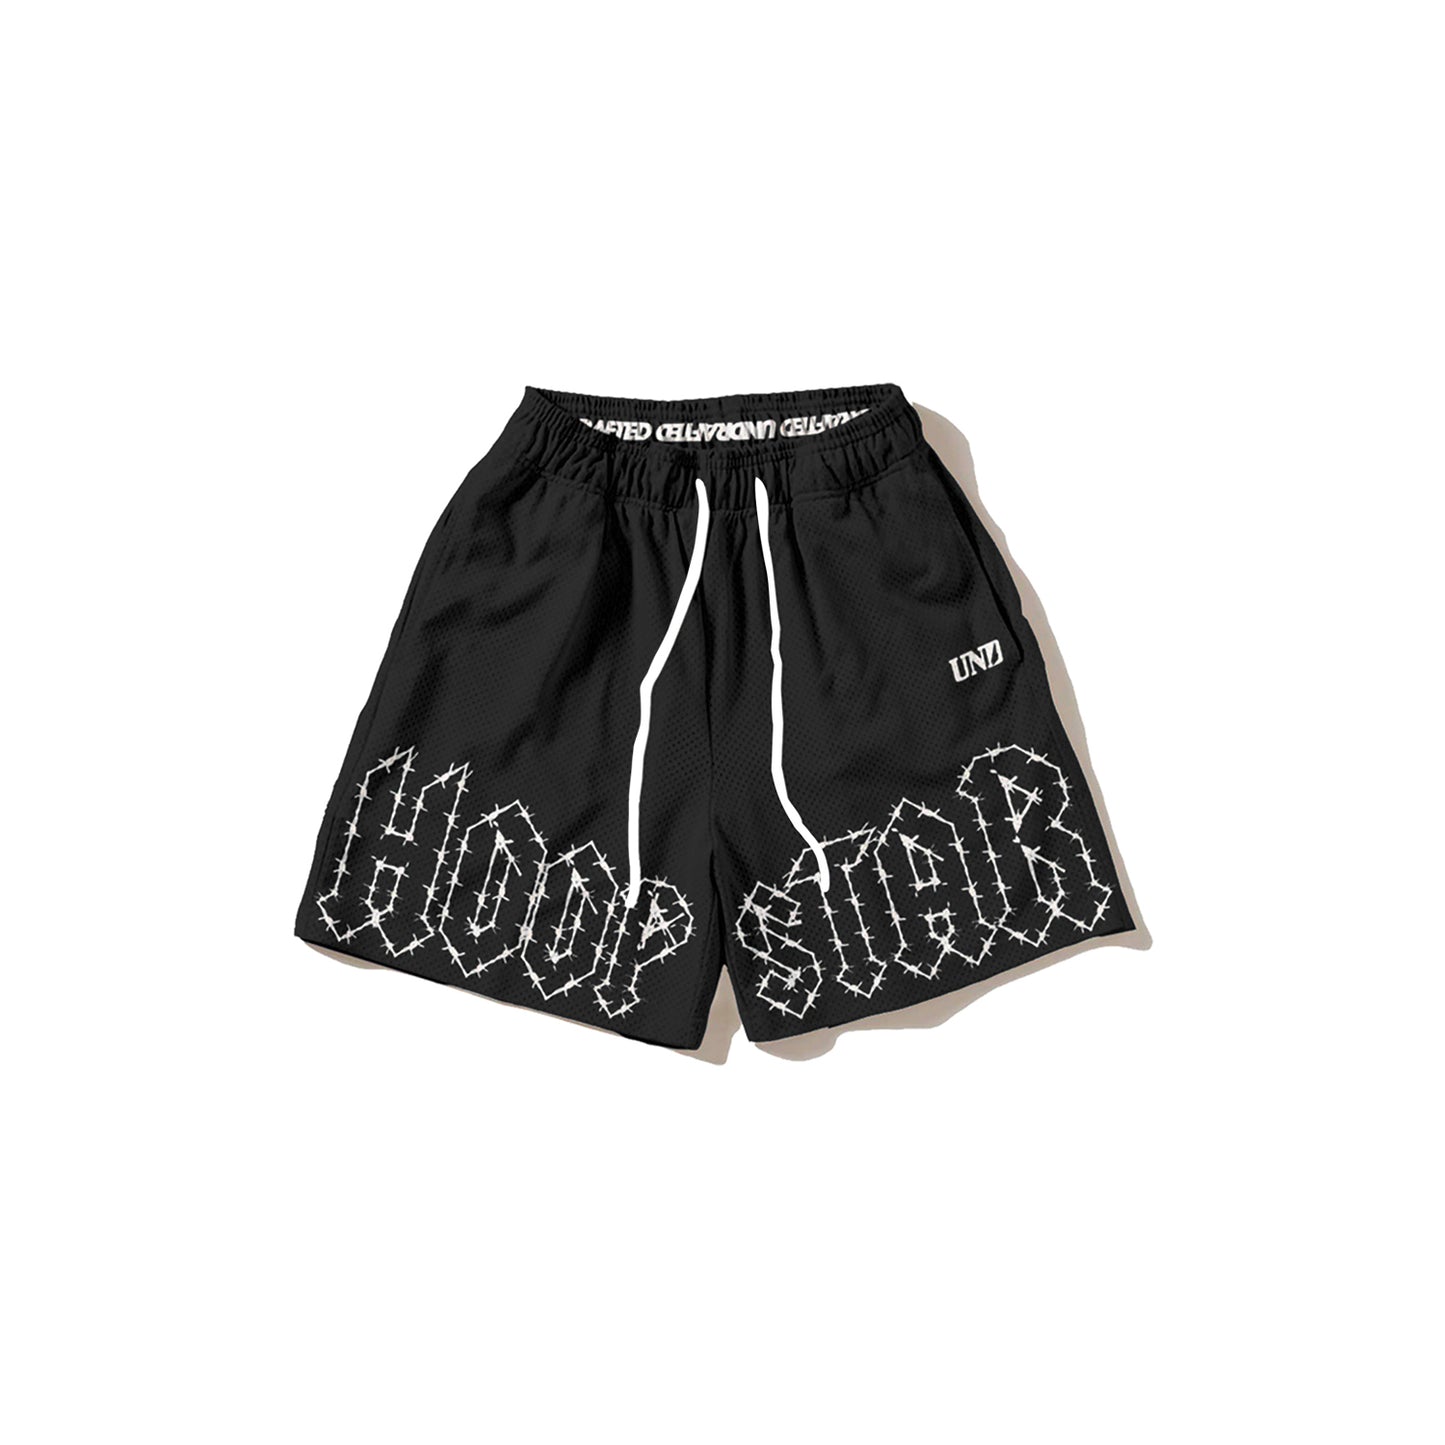 HOOP STAR Black Mesh Shorts